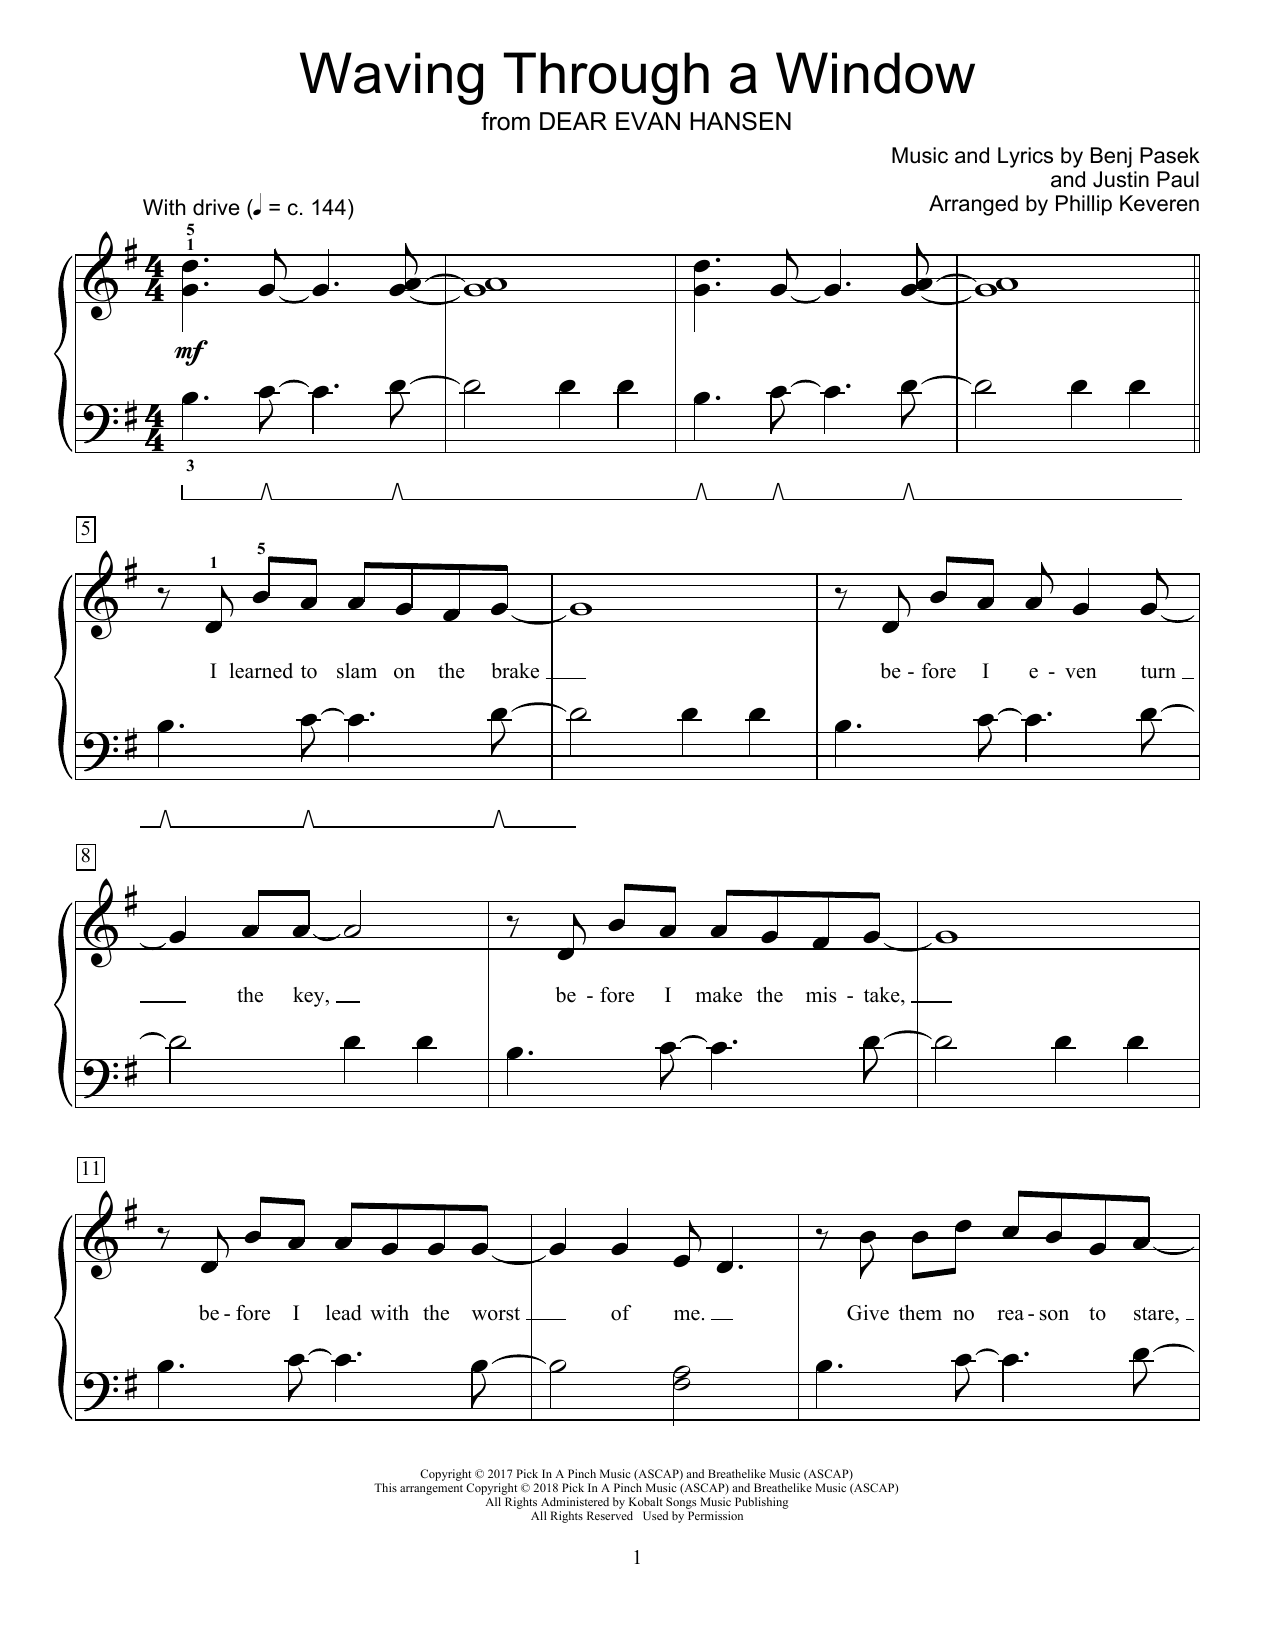 Pasek & Paul Waving Through A Window (from Dear Evan Hansen) (arr. Phillip Keveren) Sheet Music Notes & Chords for Educational Piano - Download or Print PDF